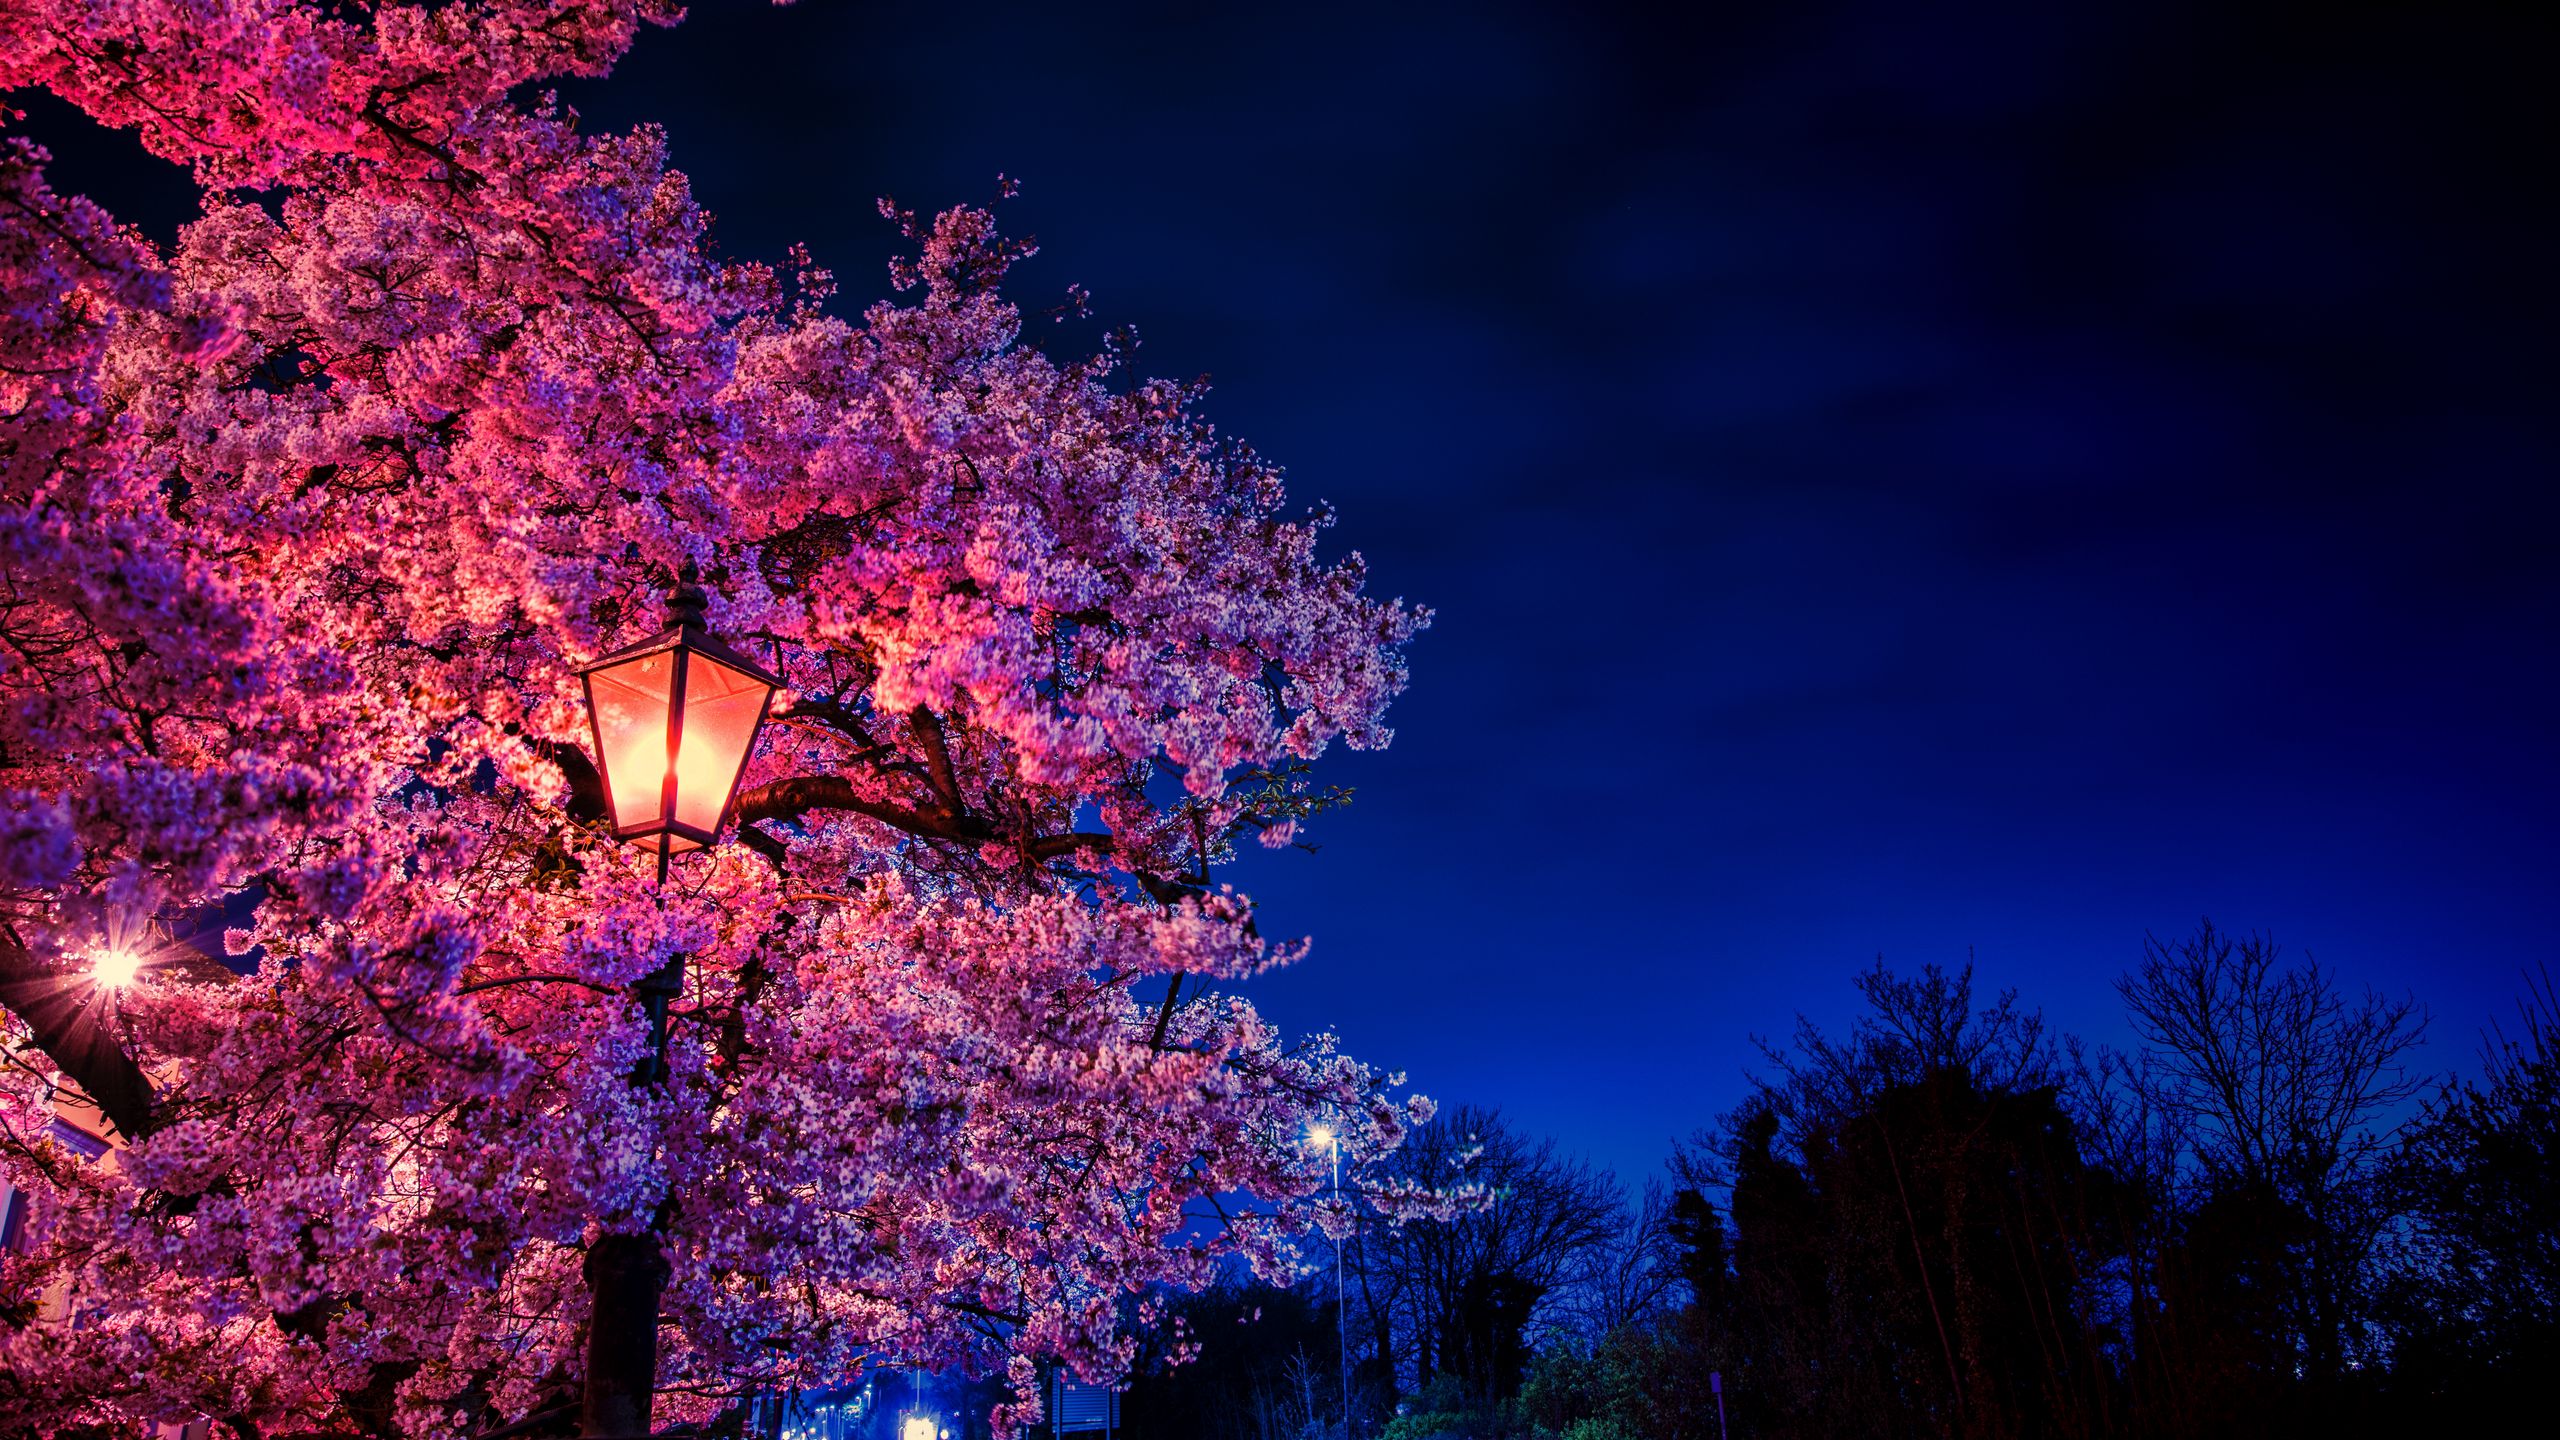 Download wallpaper 2560x1440 sakura, flowers, lantern, blooms, evening, spring widescreen 16:9 HD background